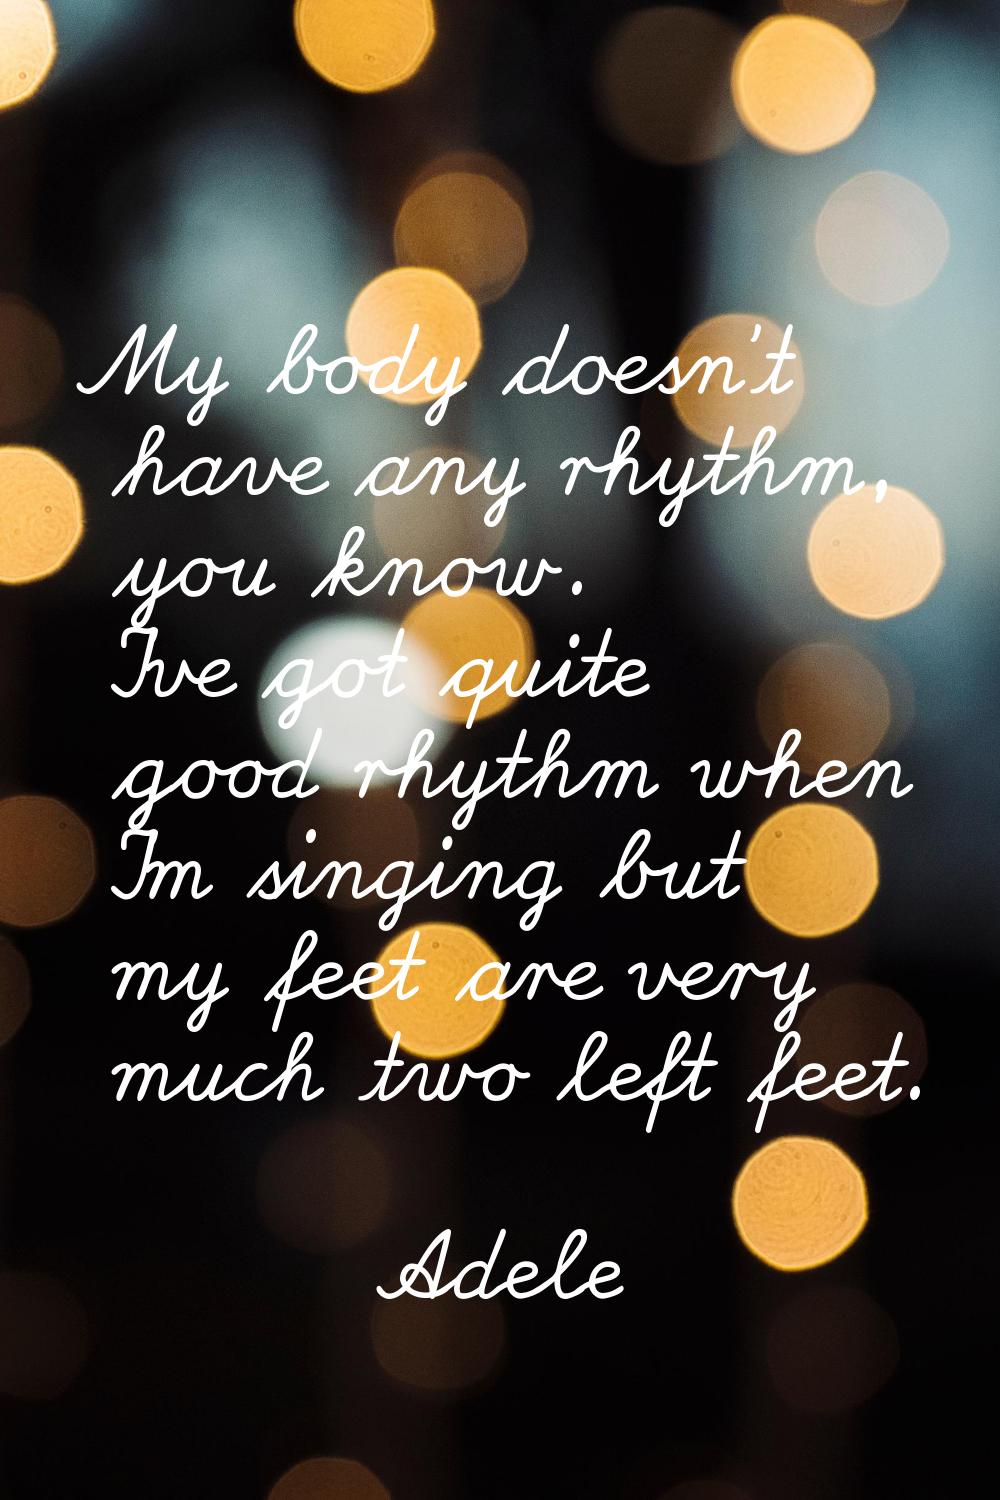 My body doesn't have any rhythm, you know. I've got quite good rhythm when I'm singing but my feet 